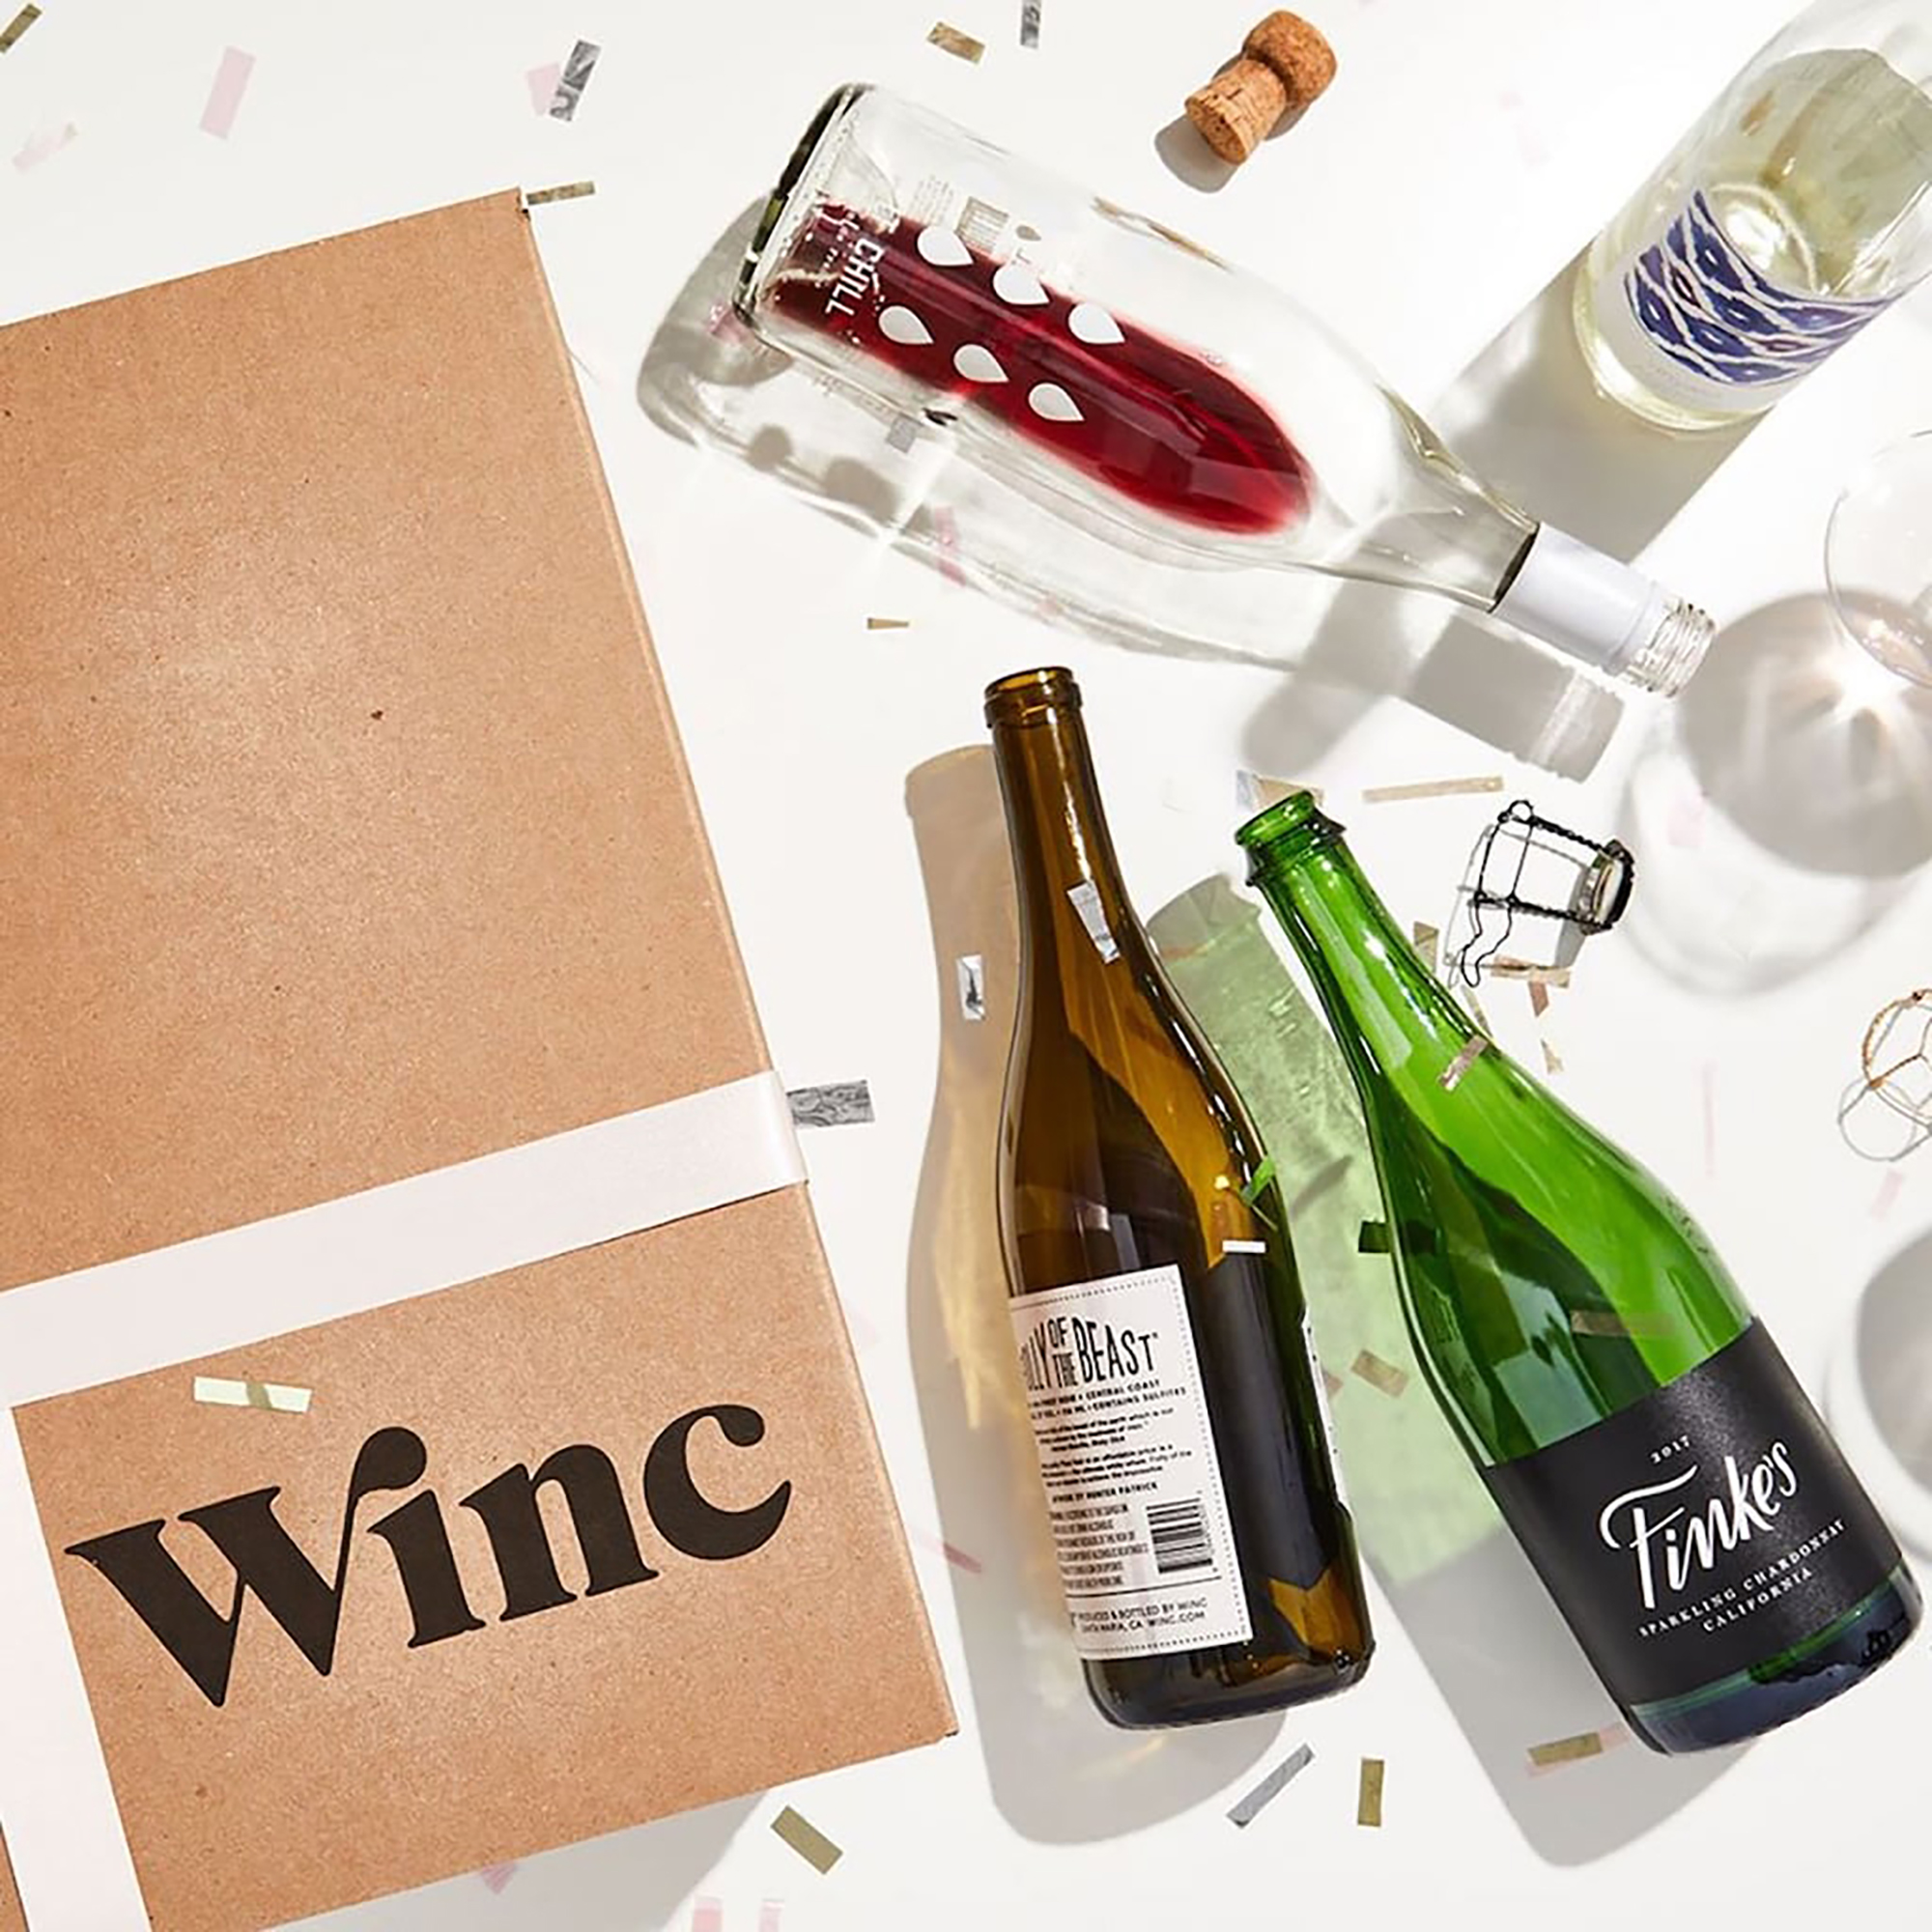 Winc wine delivery service